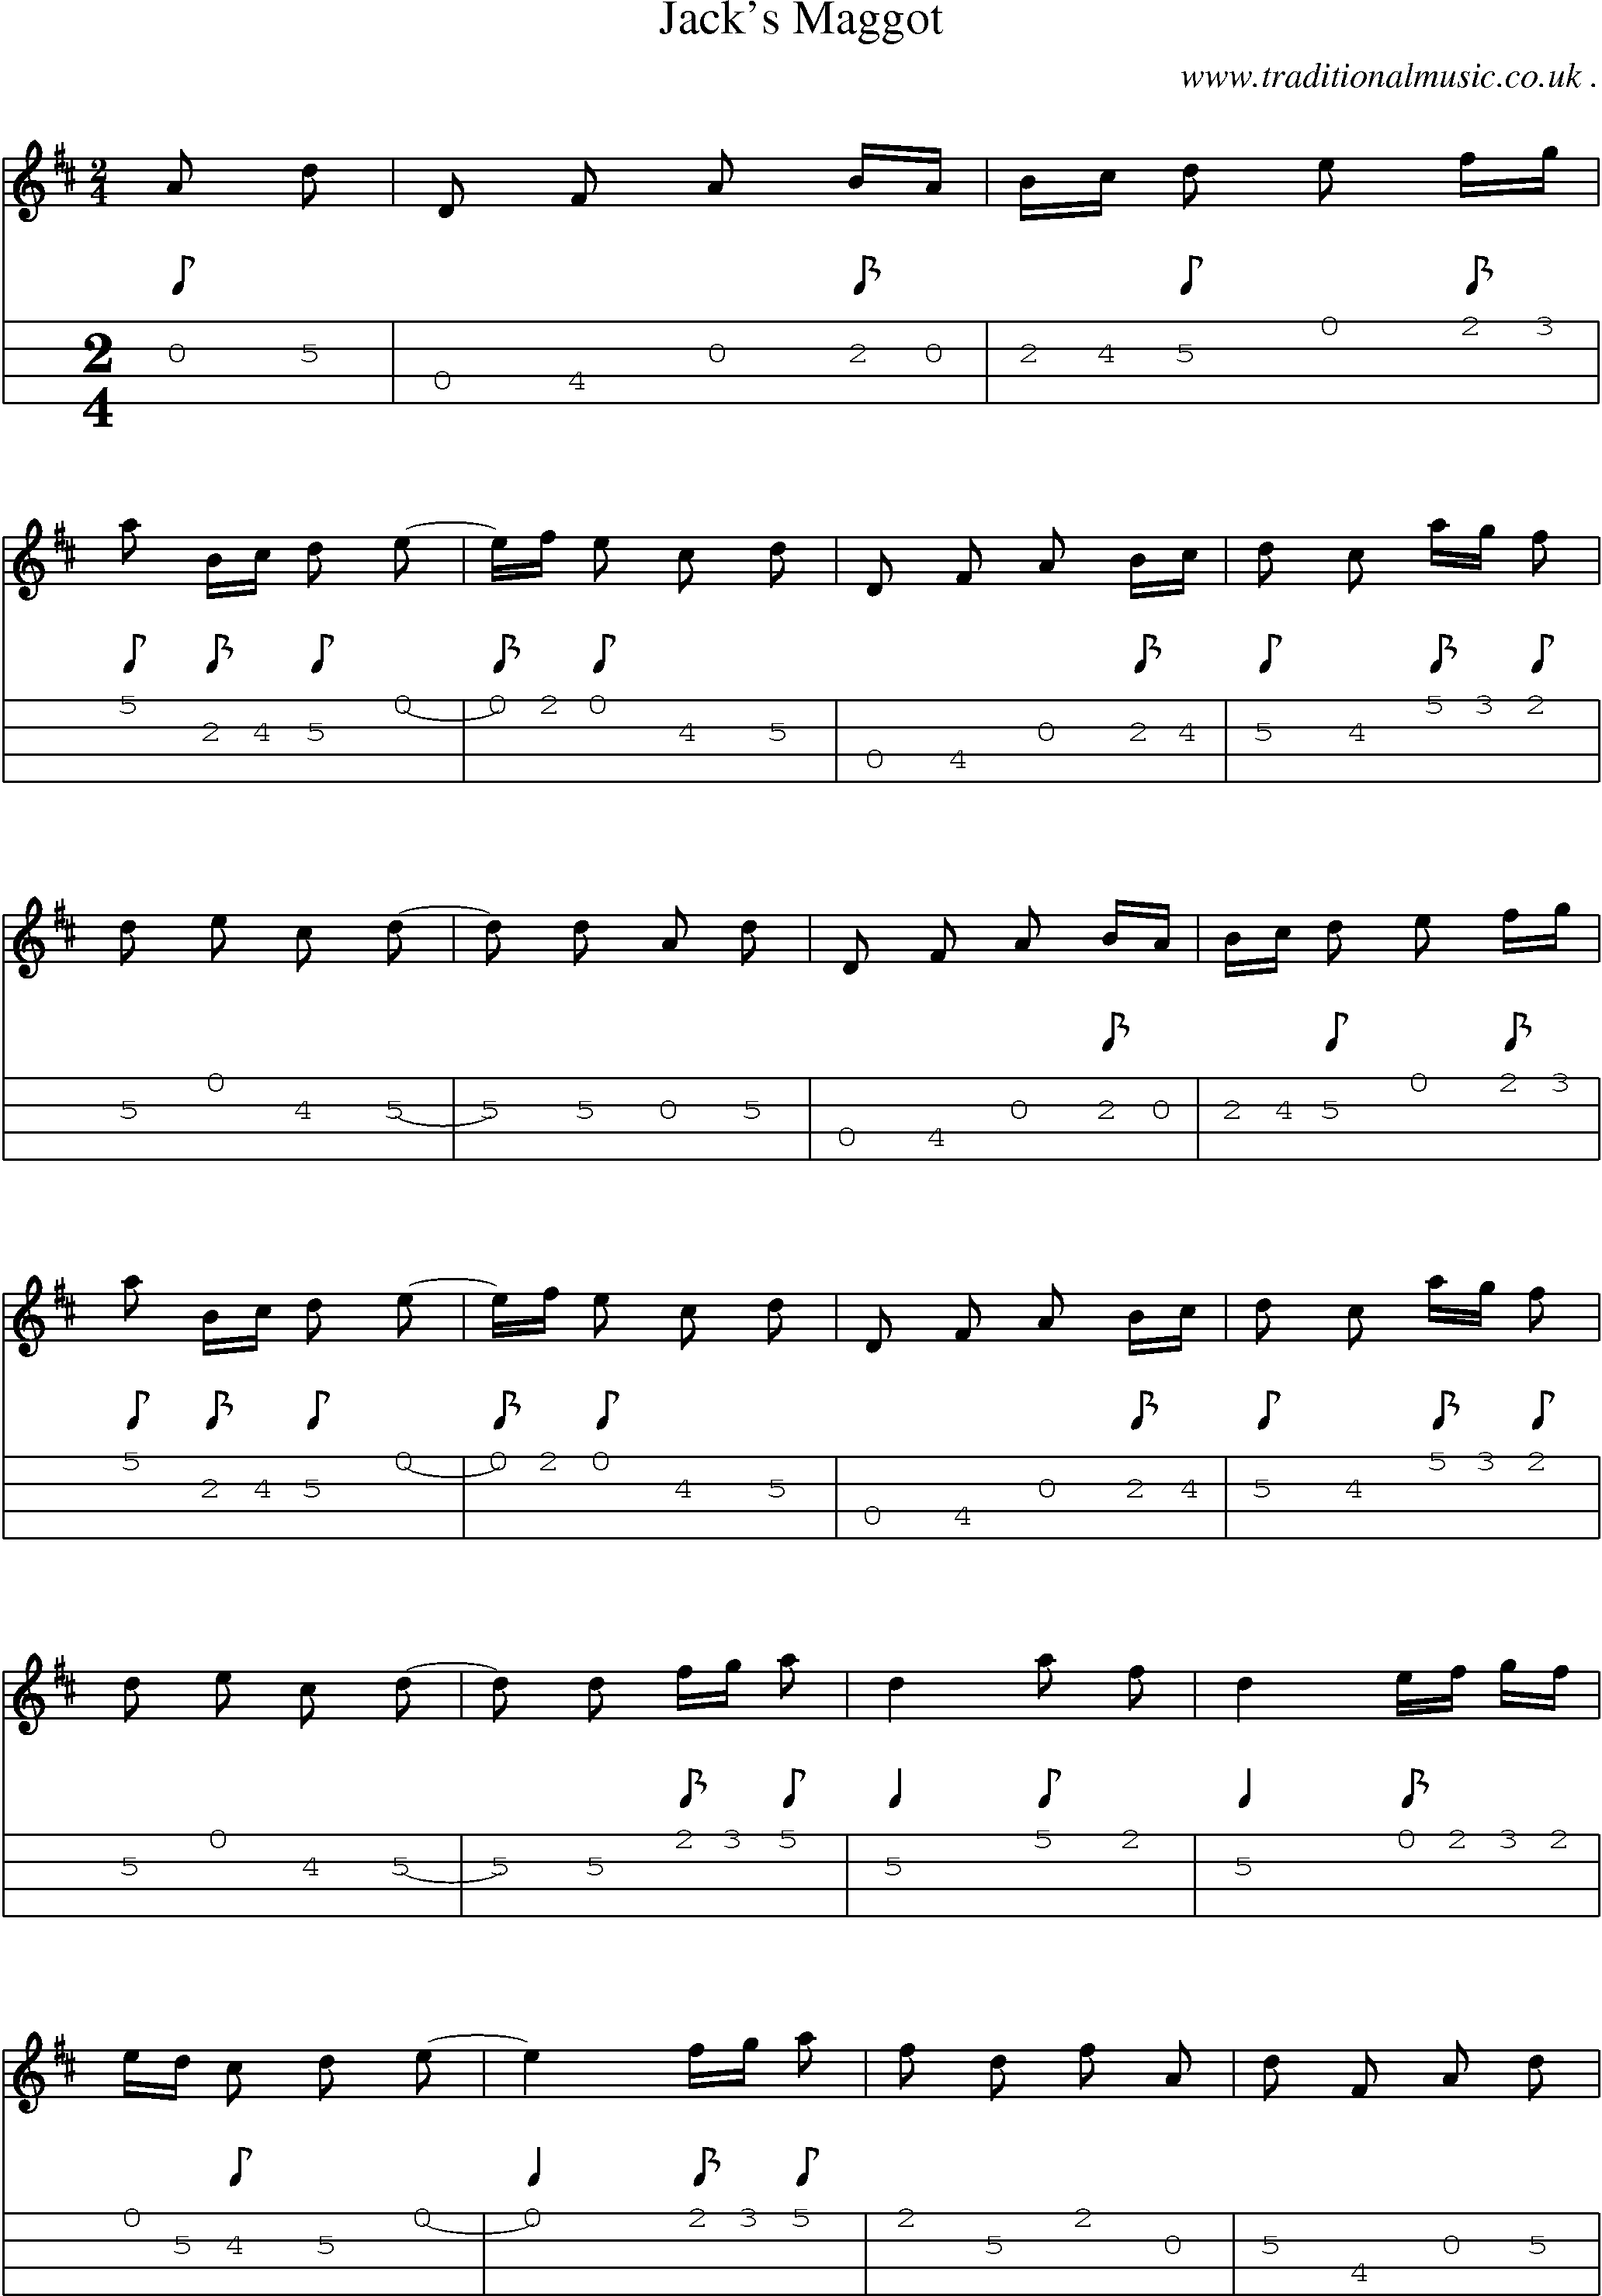 Sheet-music  score, Chords and Mandolin Tabs for Jacks Maggot